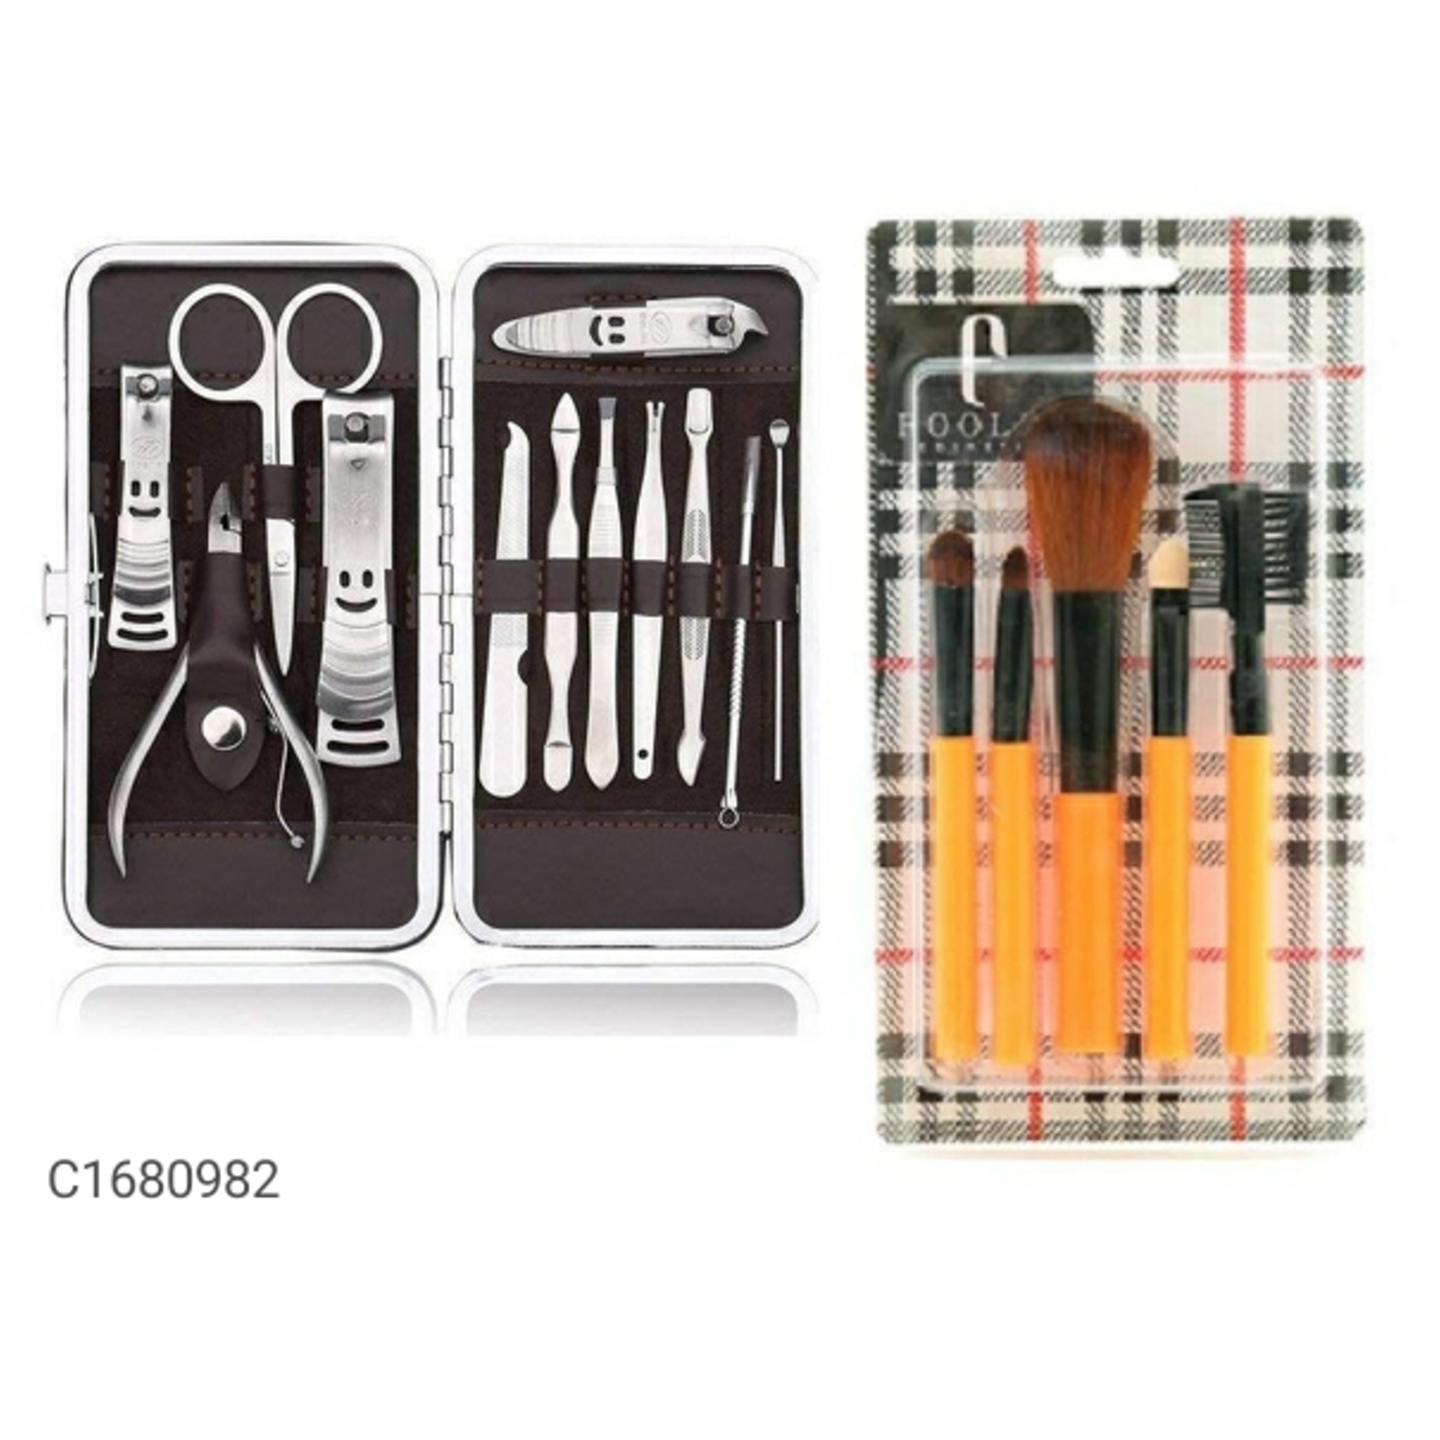 Product Name:* Manicure Pedicure And Make Up Brush Set Kit (Combo)